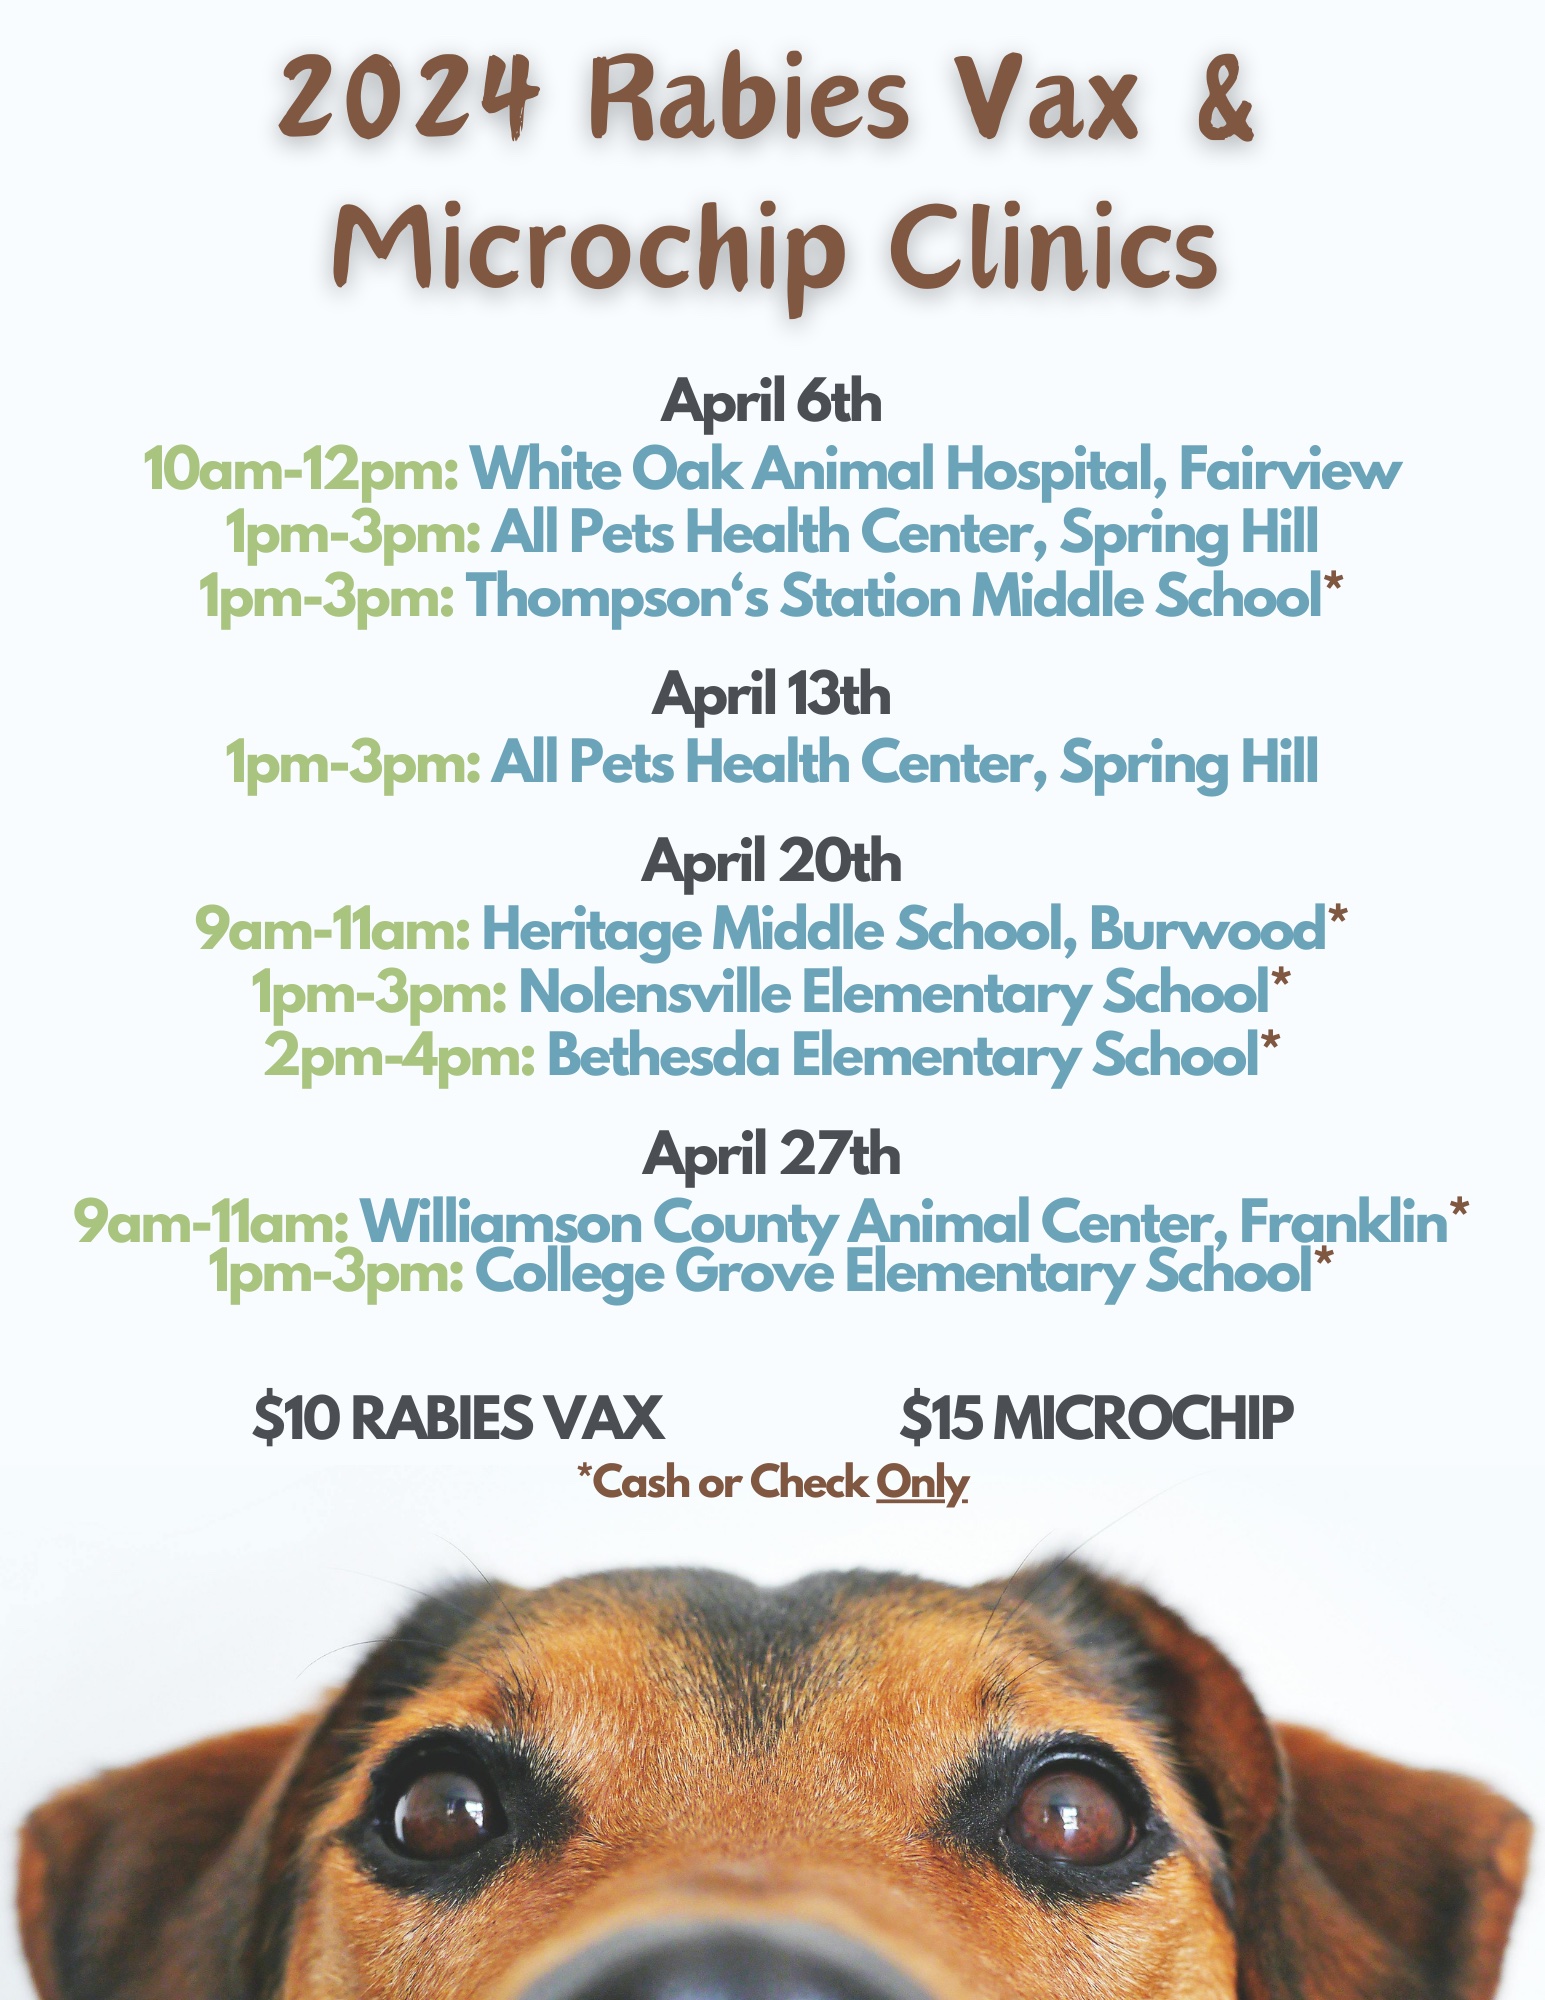 2024-Rabies-Vaccination-Microchip-Clinics-in-Franklin-TN.